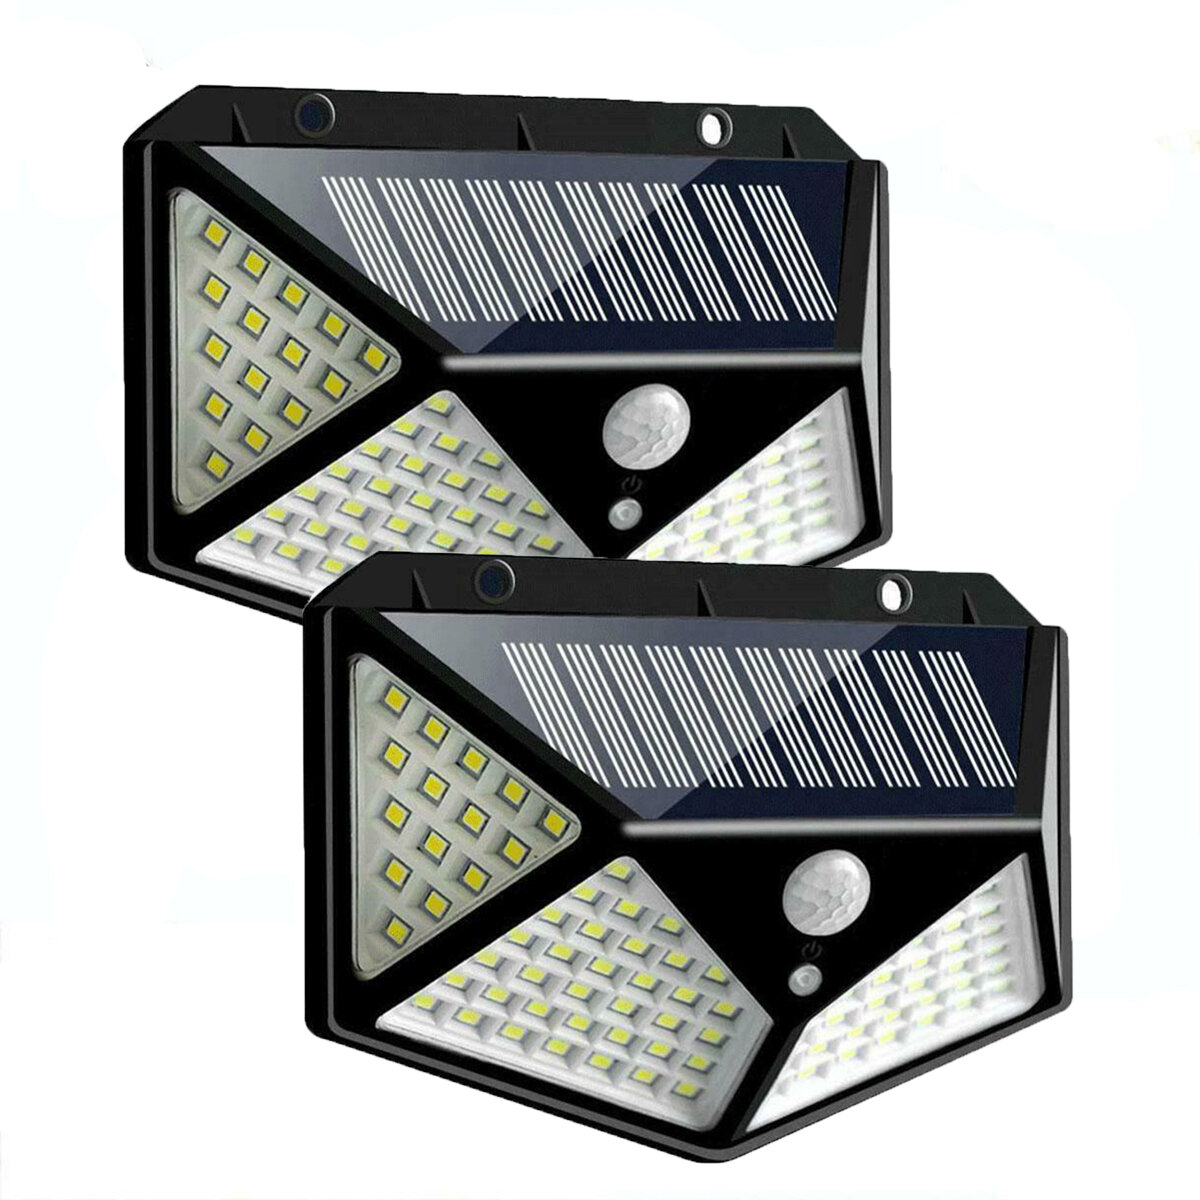 LOT 100 LED Solar Powered Light Outdoor Motion Sensor Wall Yard Garden Lamps USA 